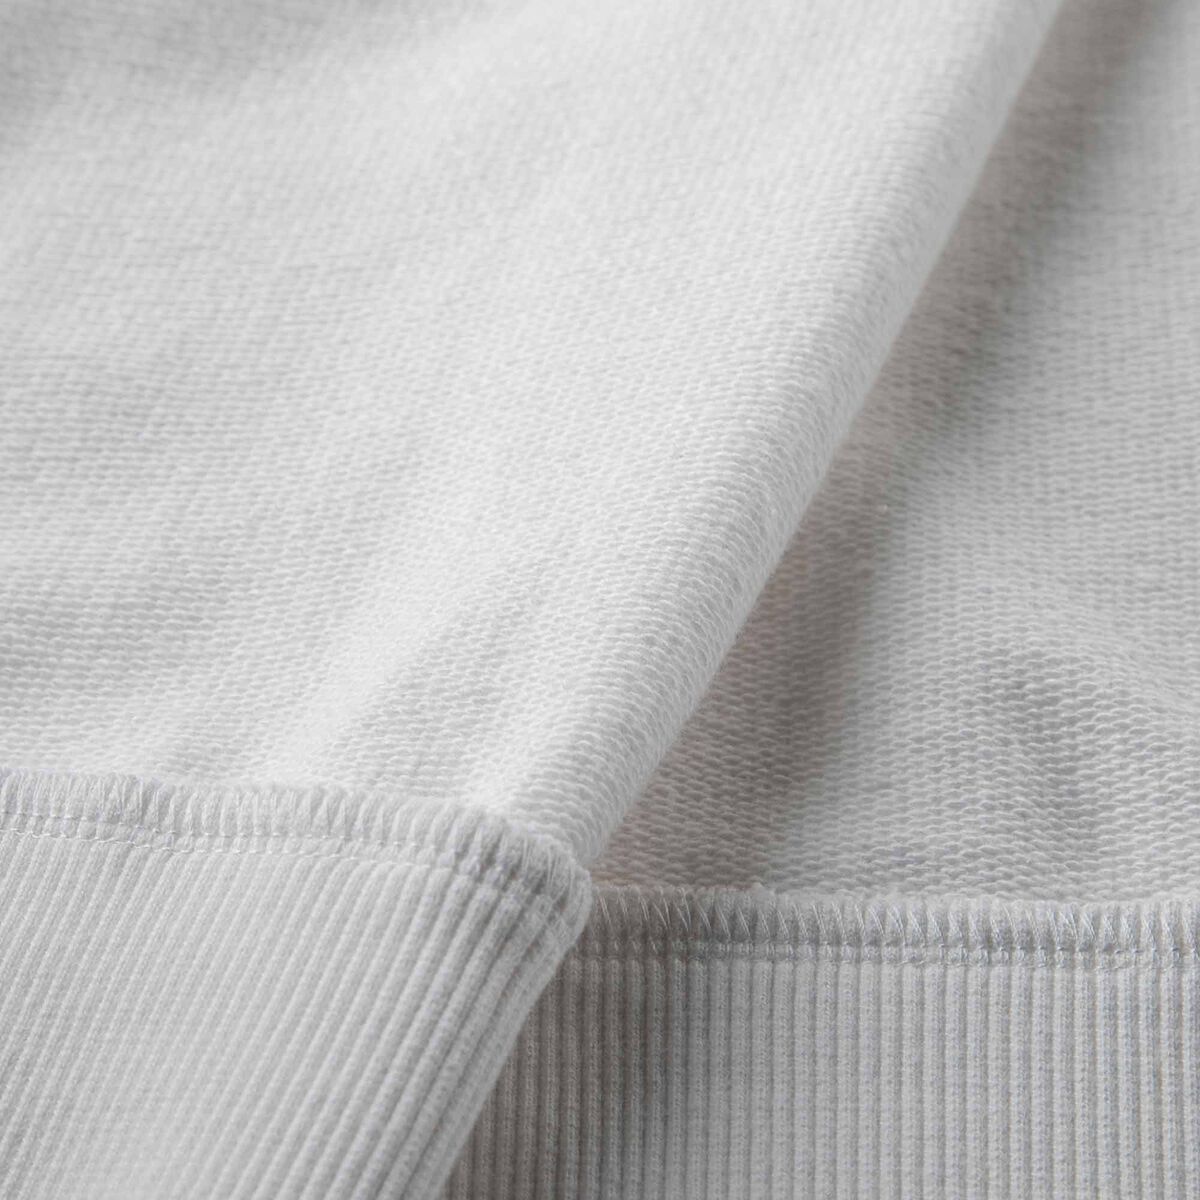 Rossignol Women's hooded logo cotton sweatshirt white